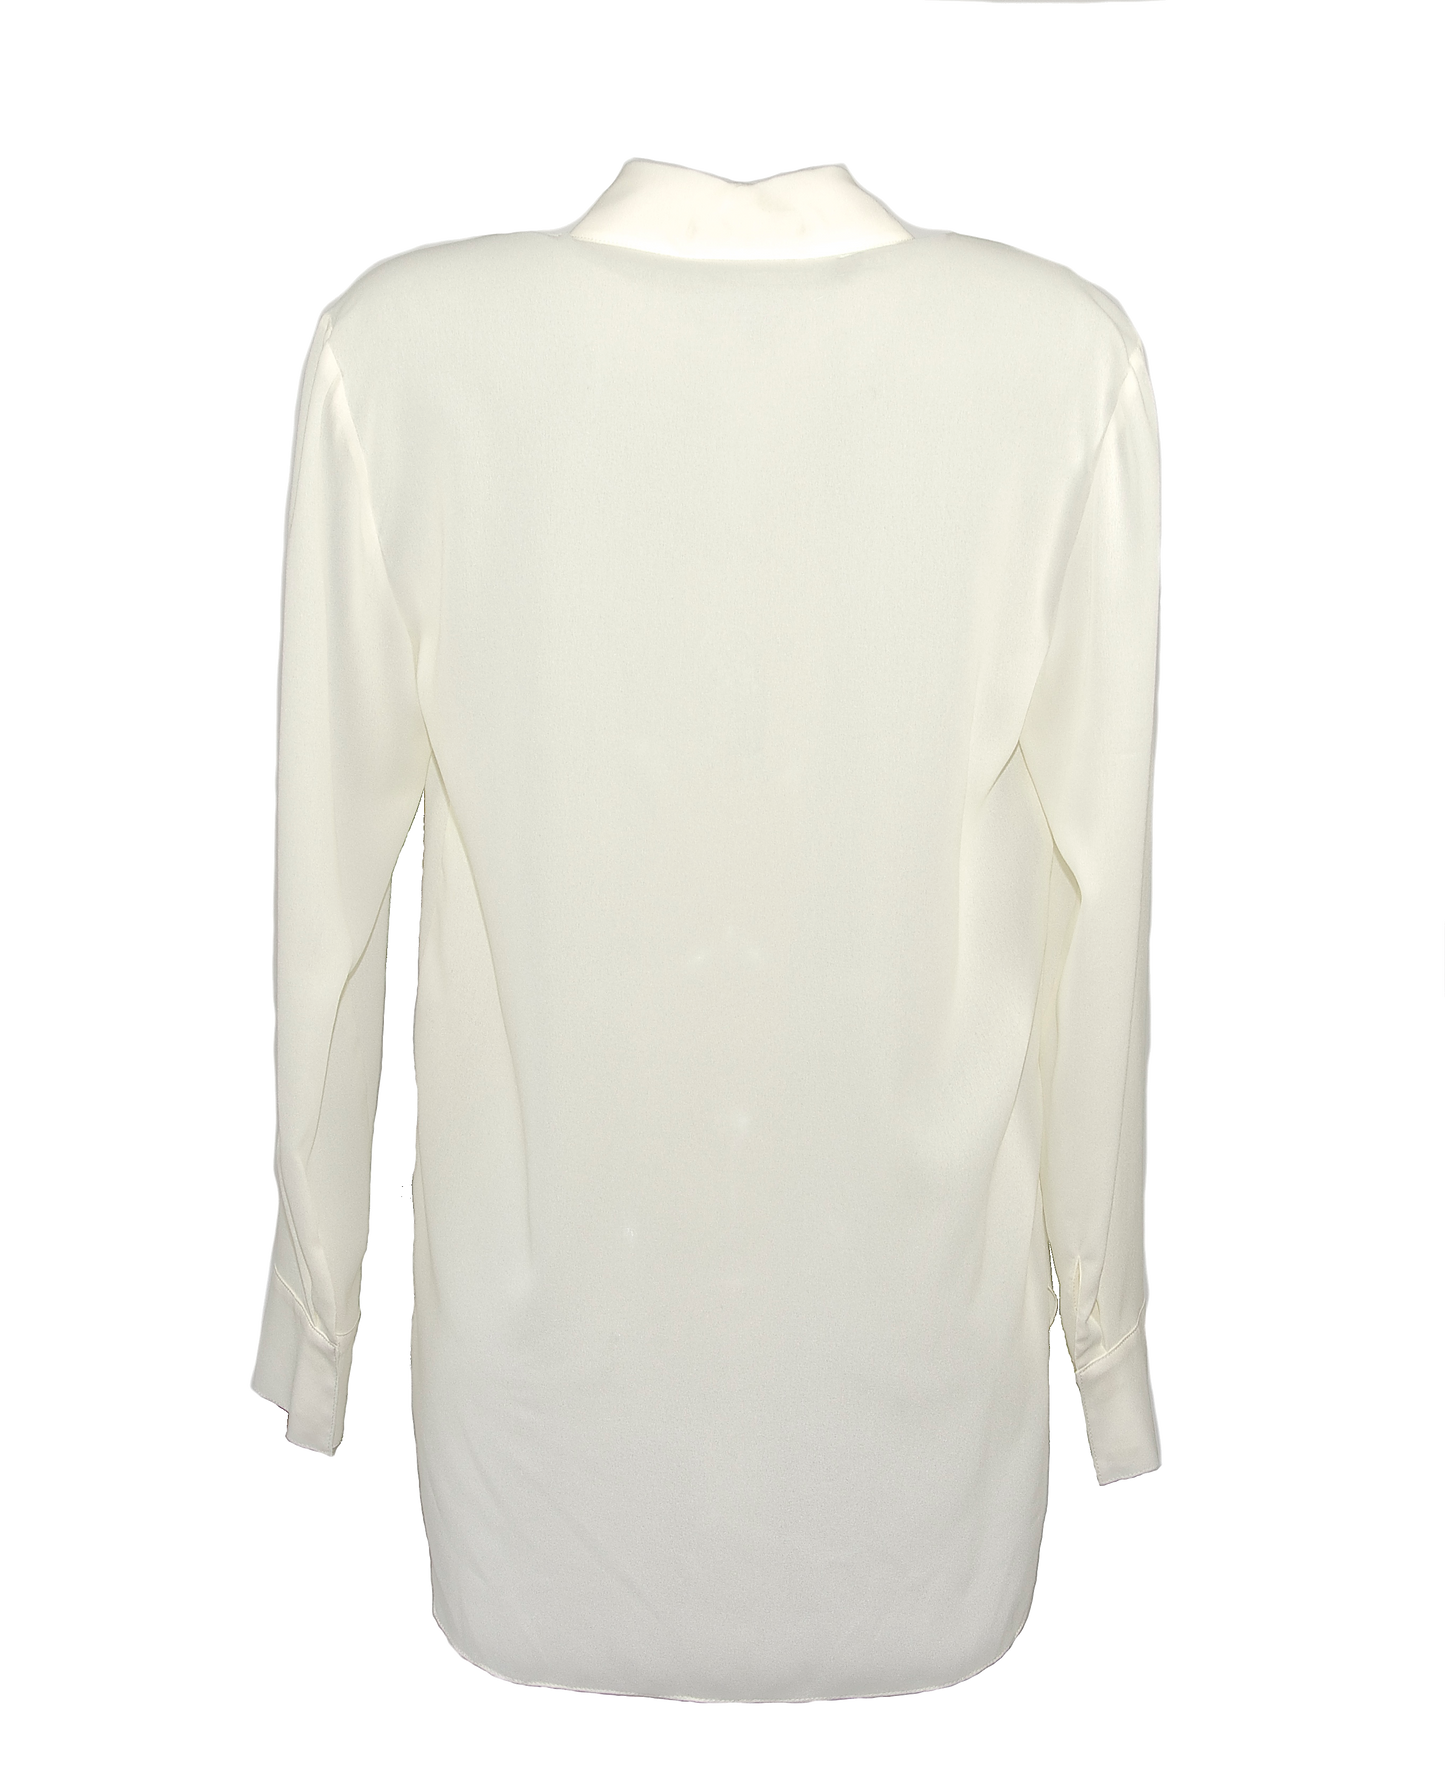 Blouse in cream white long sleeves